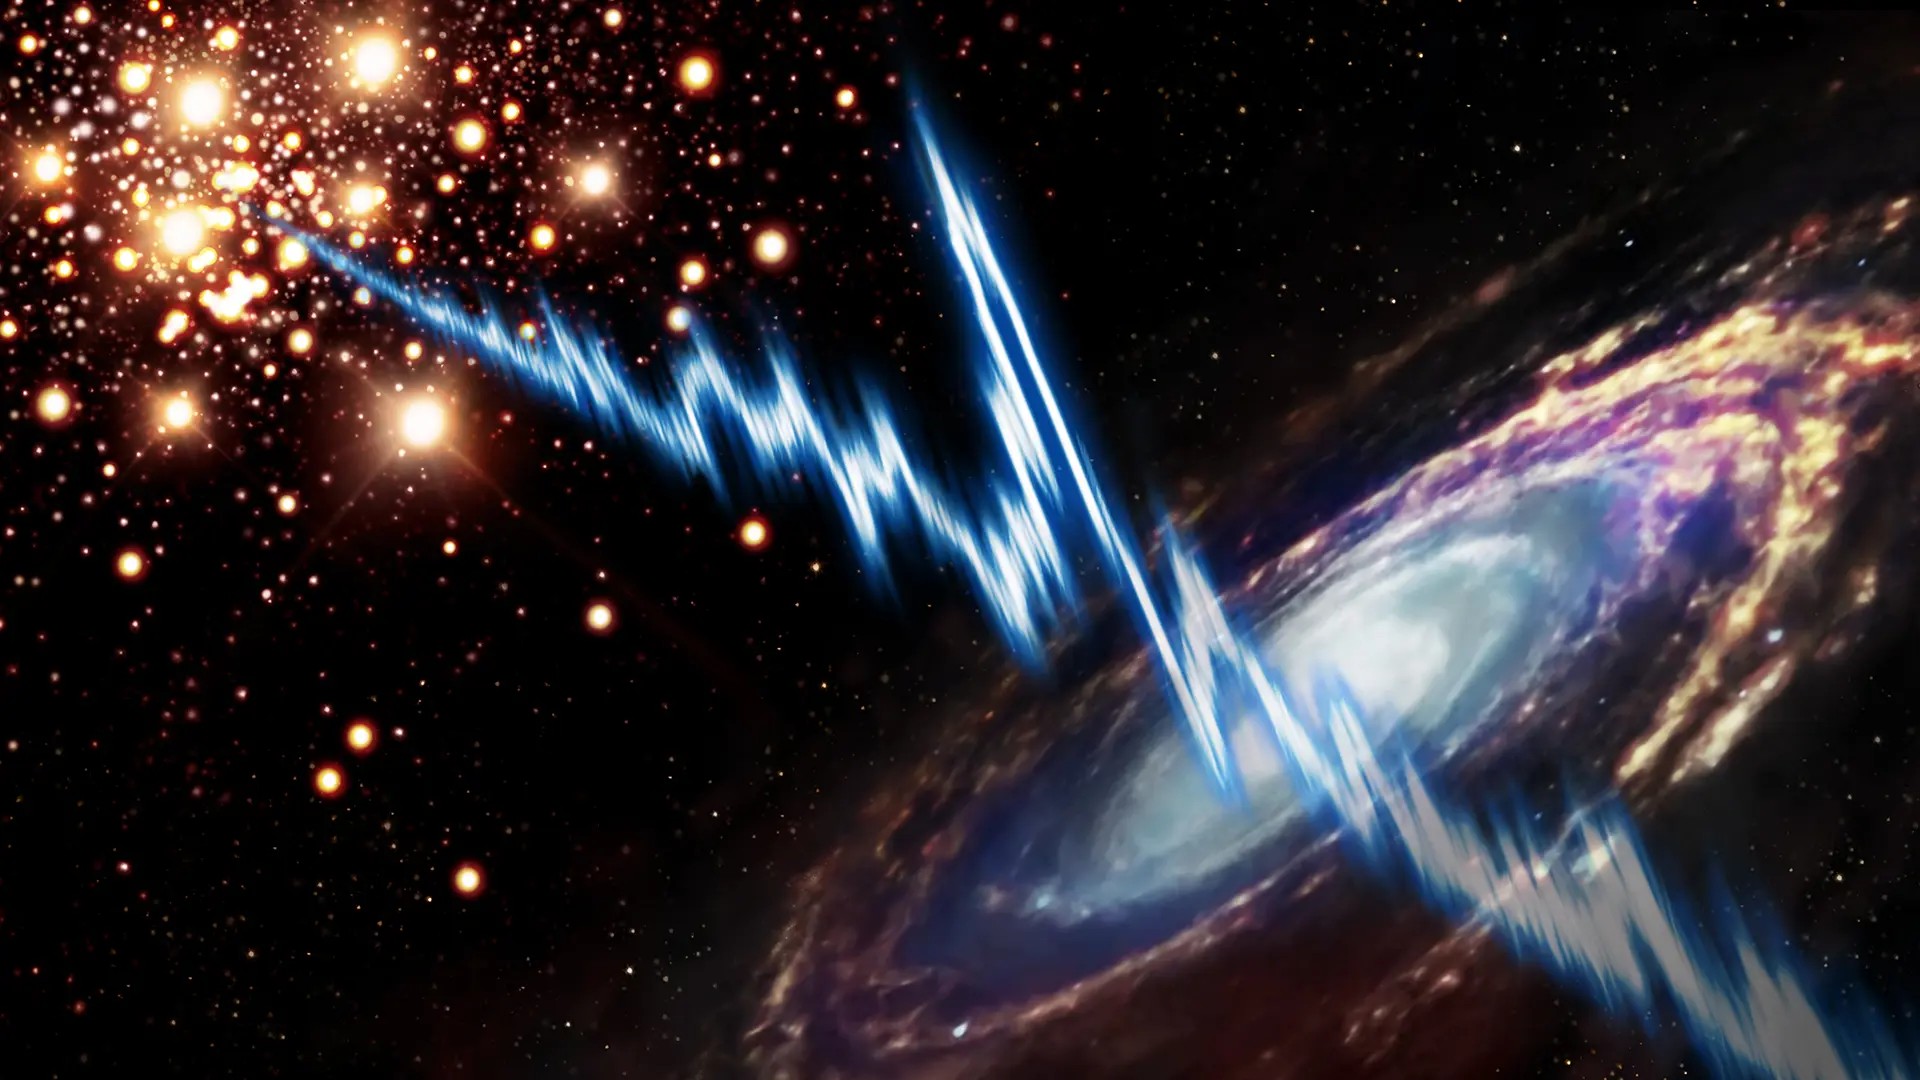 Star cluster illustration with fast radio burst (Credit: Danielle Futselaar artsource.nl)